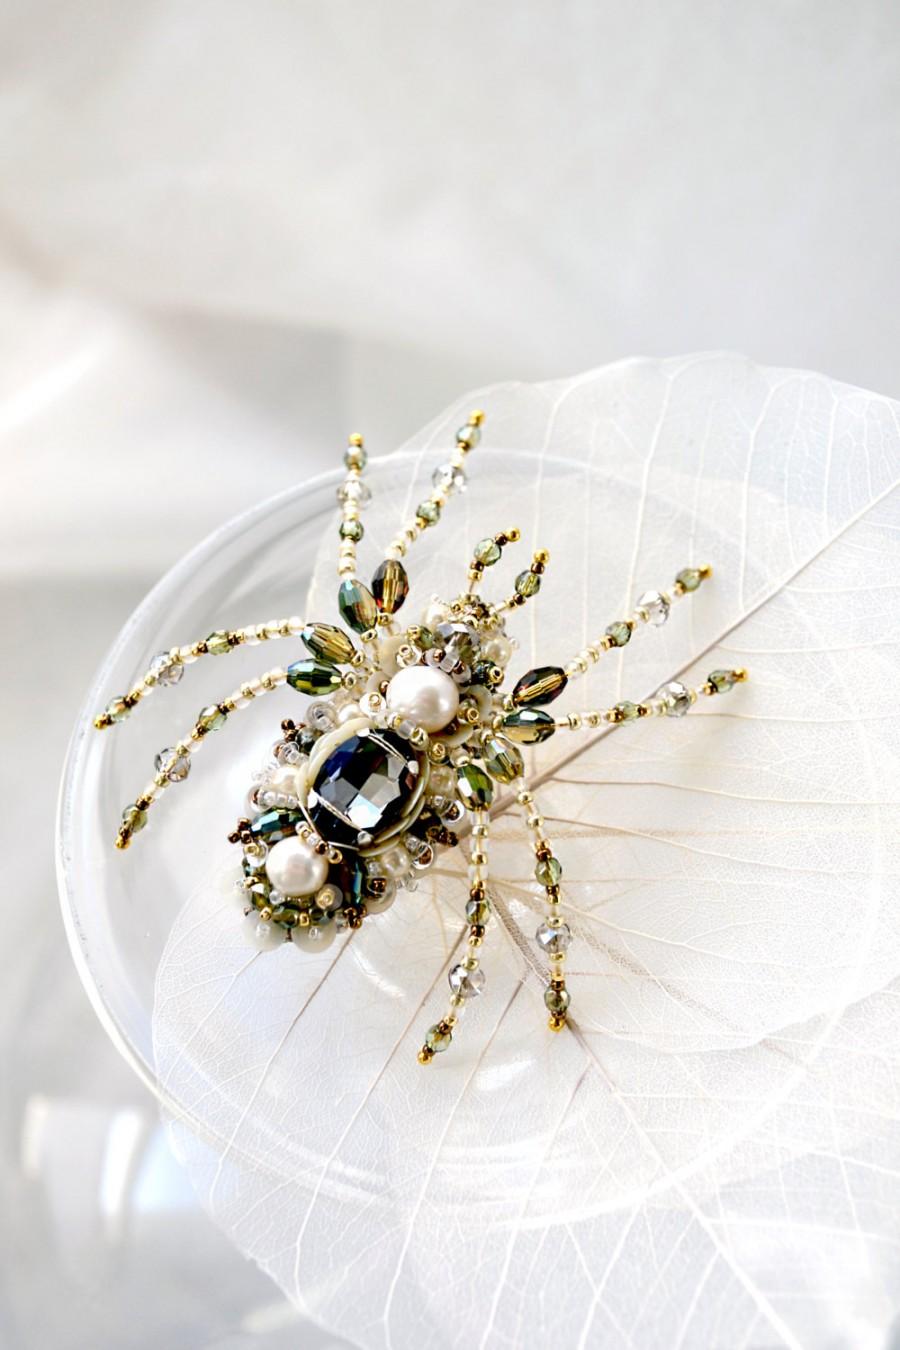 Hochzeit - Spider jewelry Unique Statement jewelry Spider brooch beadwork Designer jewelry Luxury gift for wife Mothers day gift Birthday gift for her